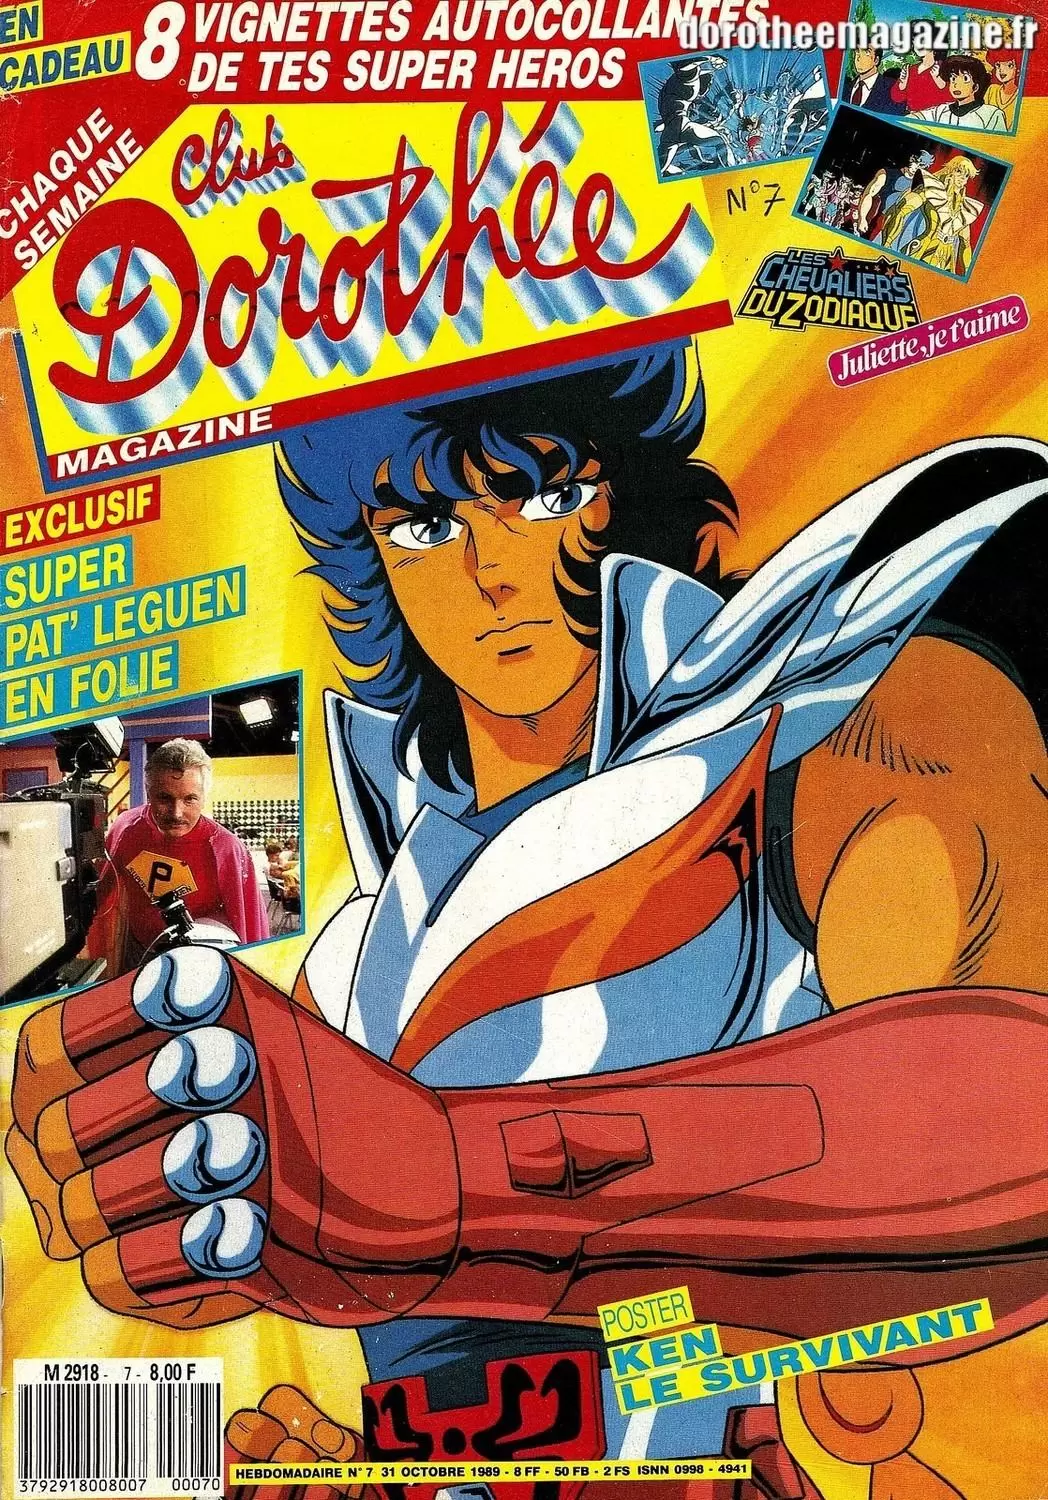 D.manga (Dorothée Magazine) - Dorothée Magazine N° 007